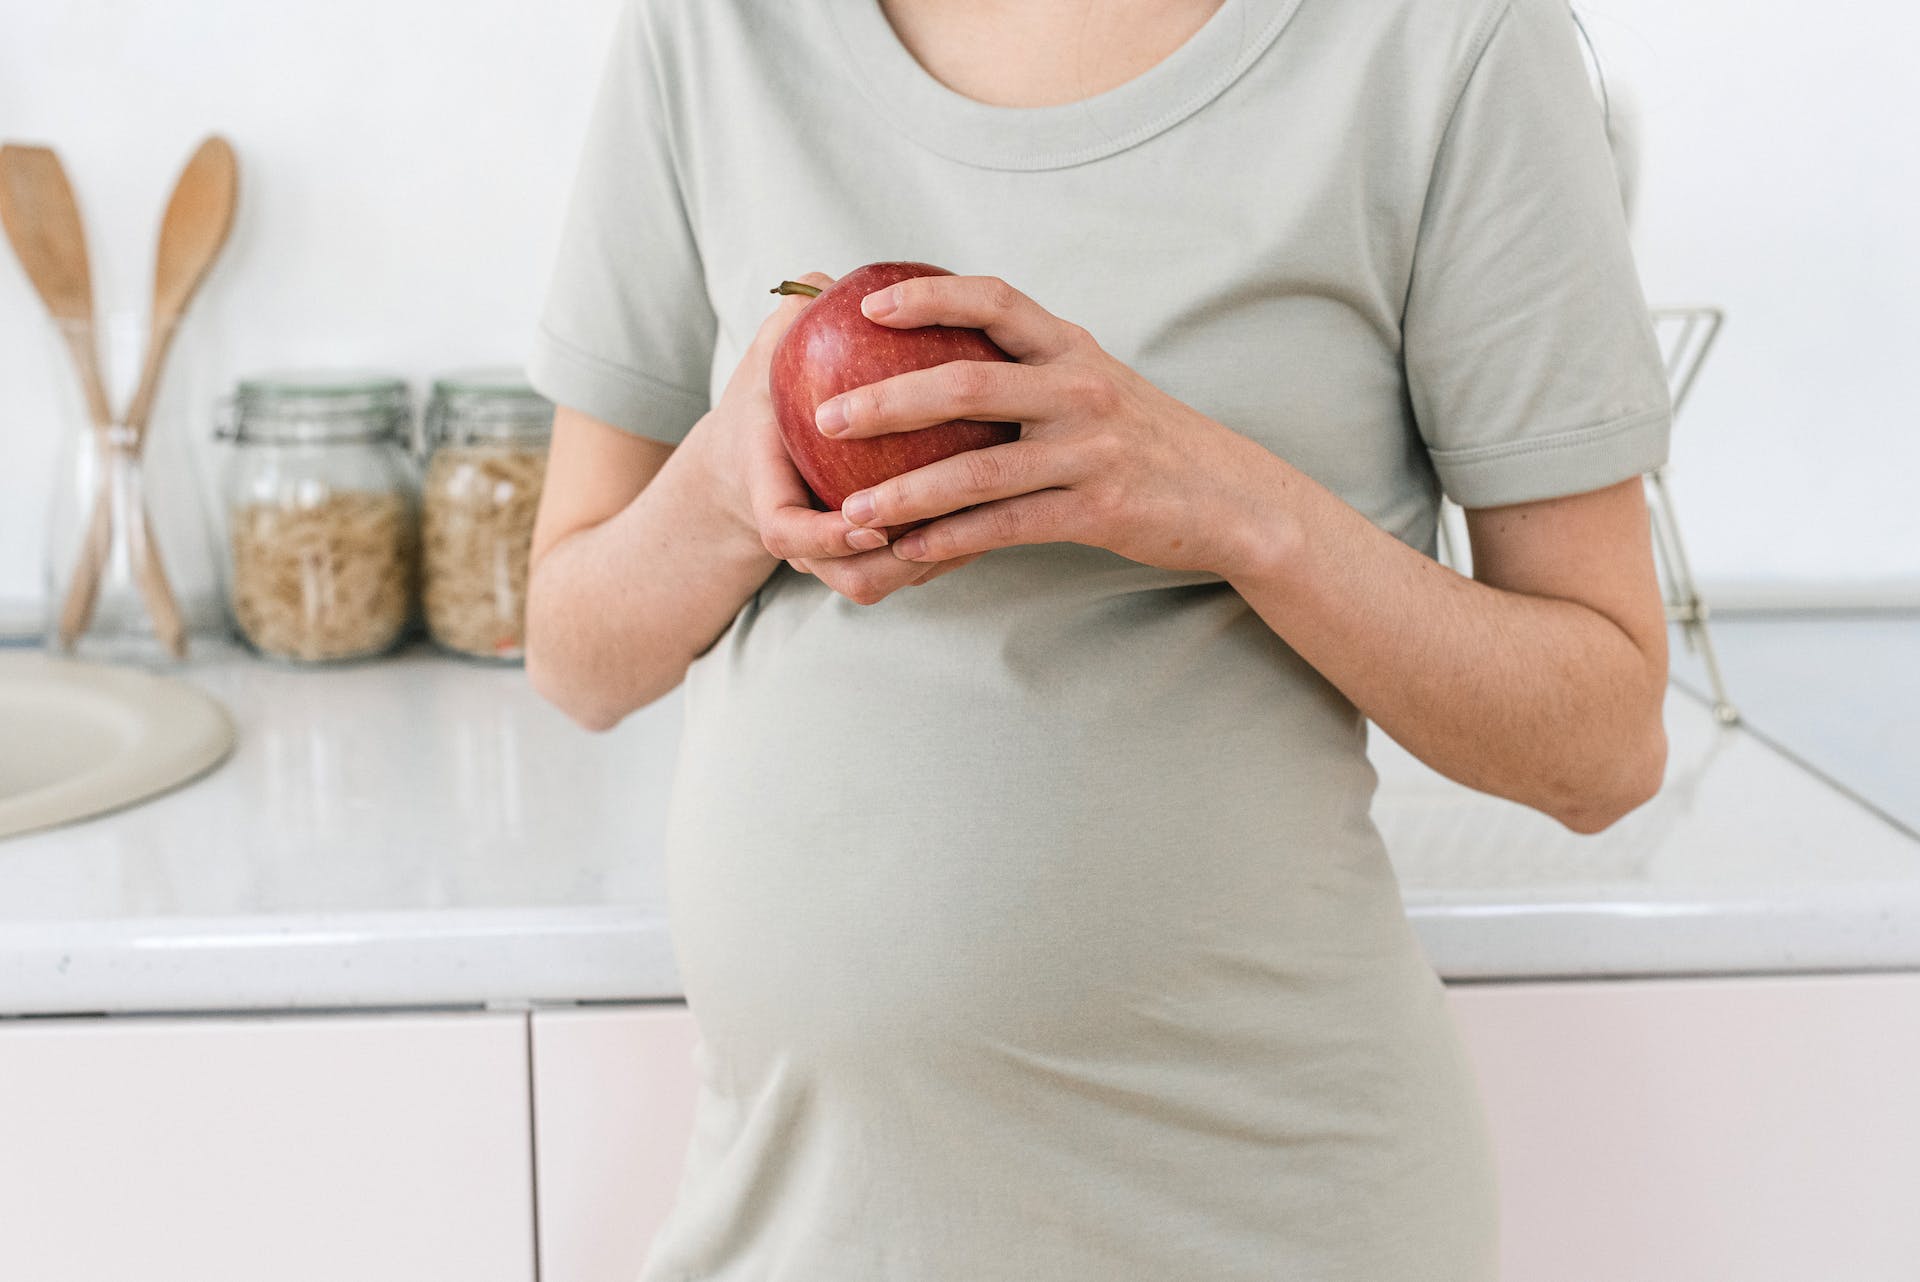 Pregnant woman | Source: Pexels